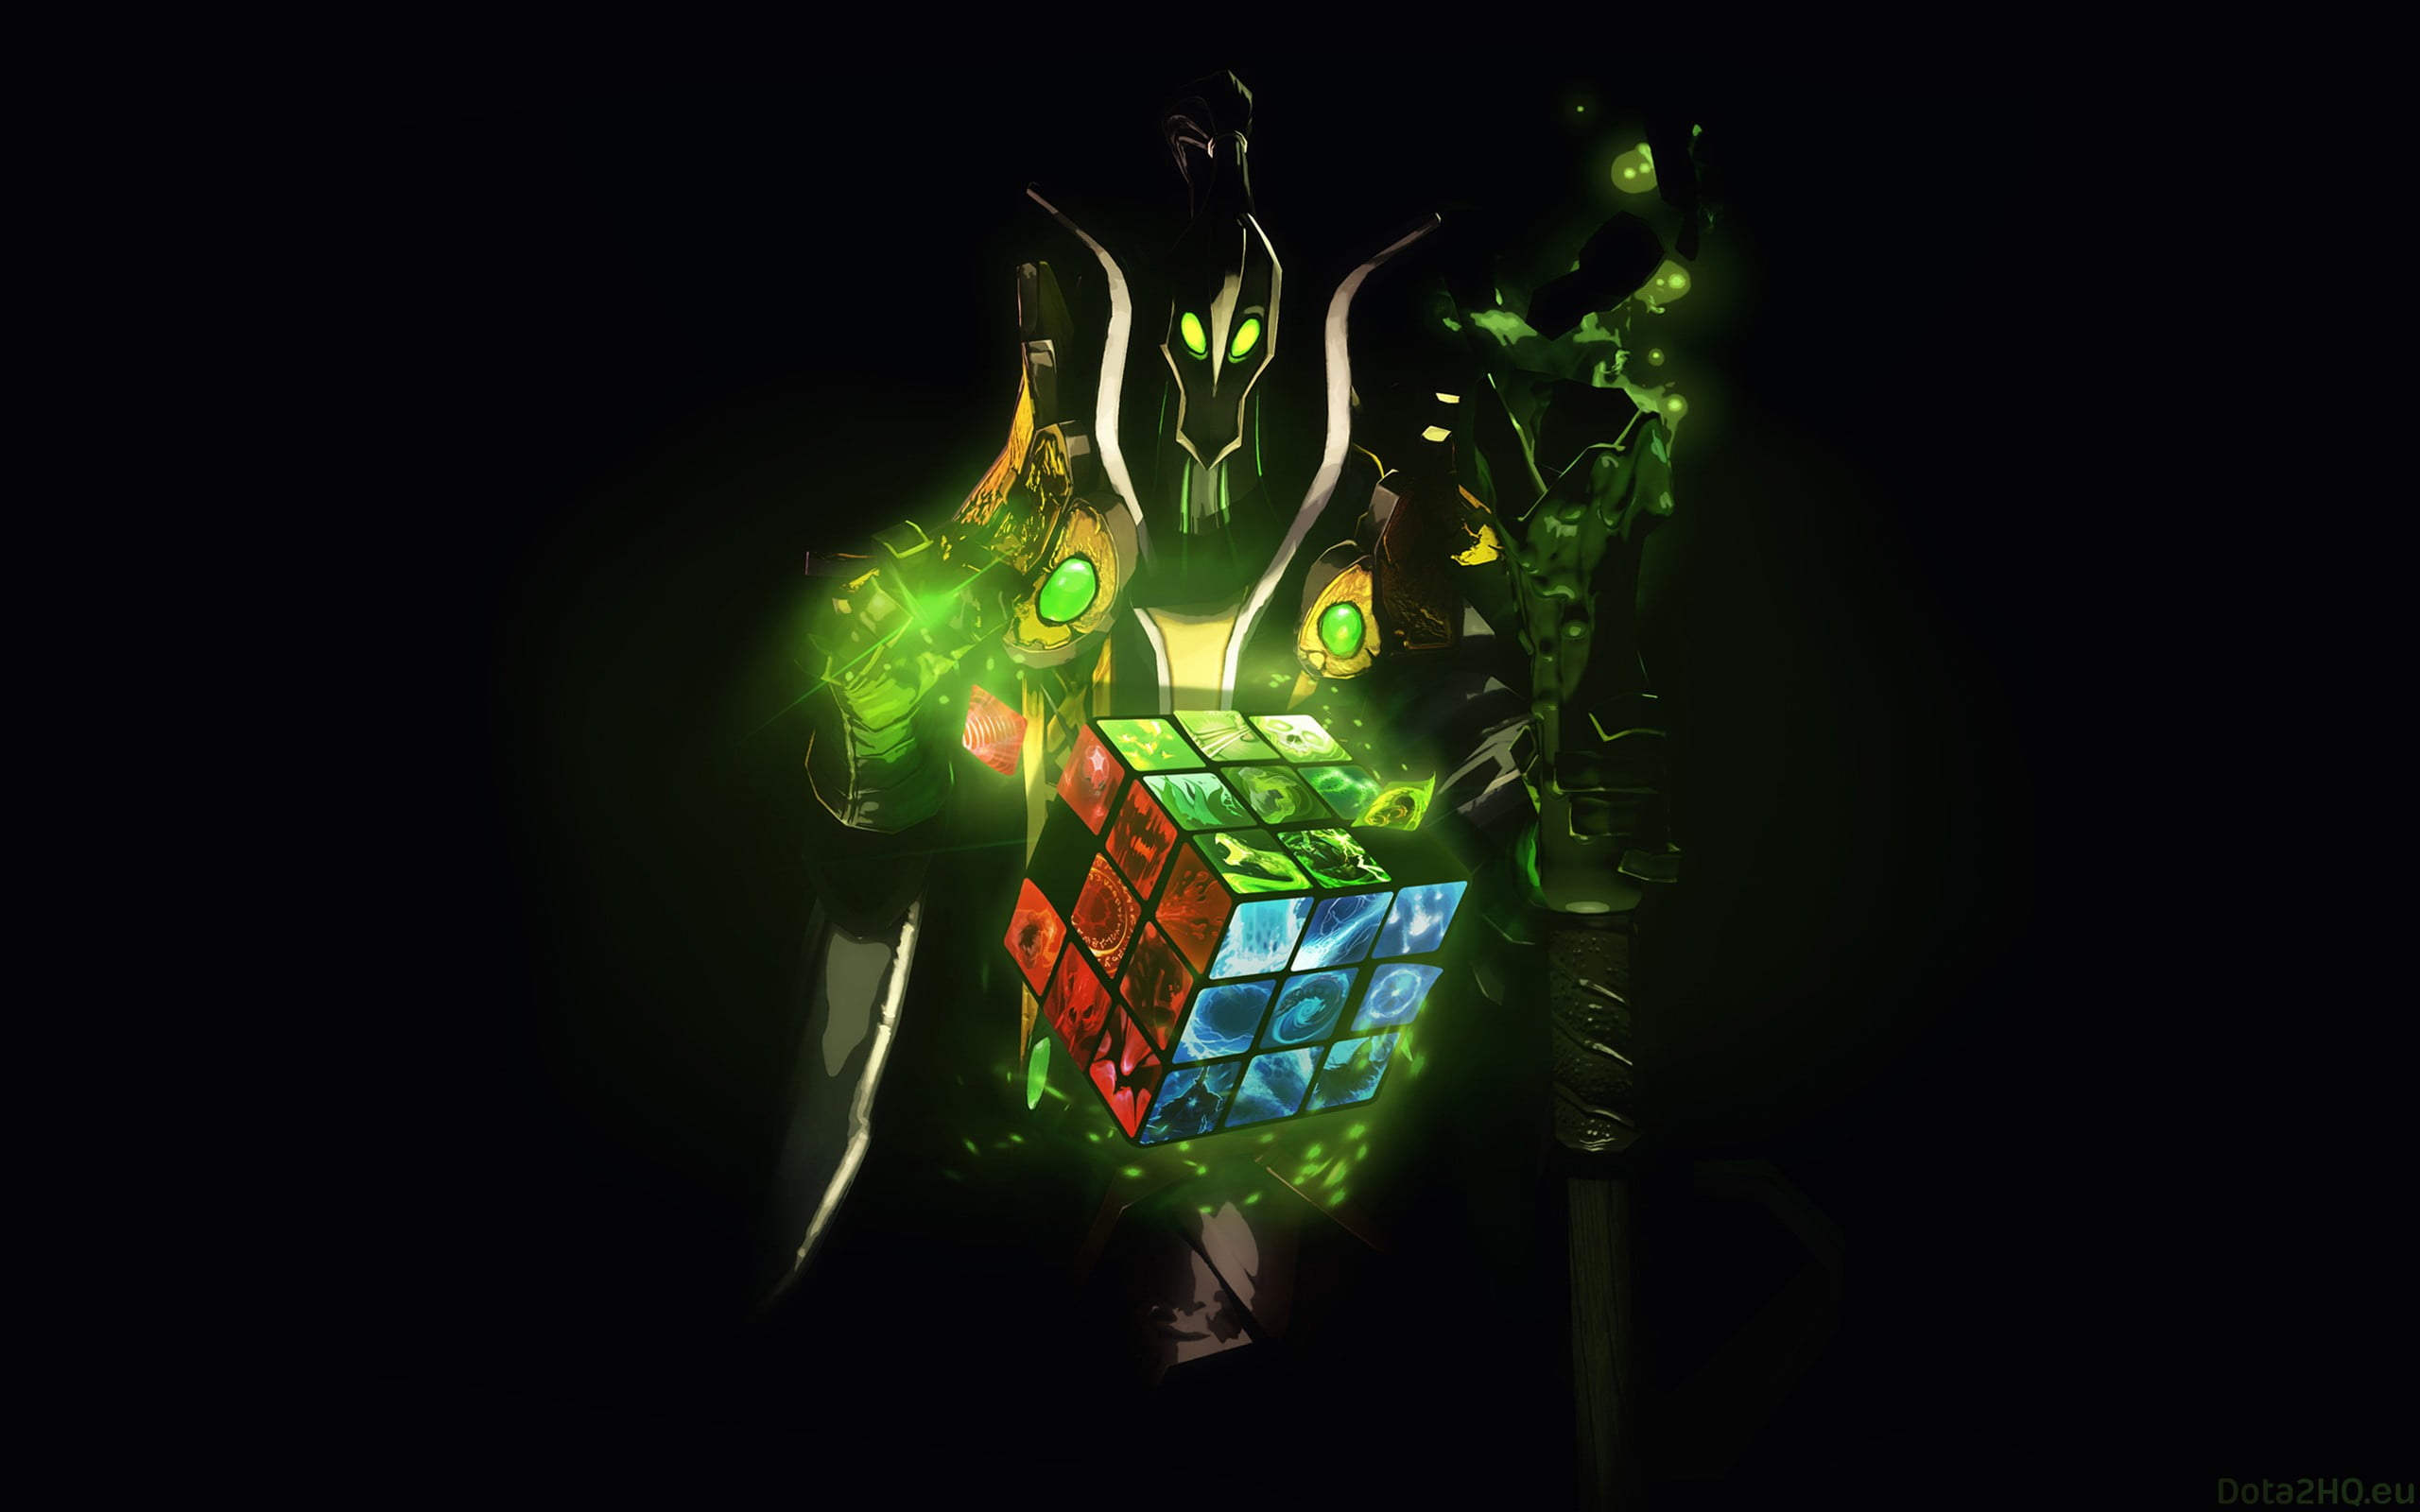 Dota 2, Rubick the Grand Magus, Rubik's Cube, studio shot, green color